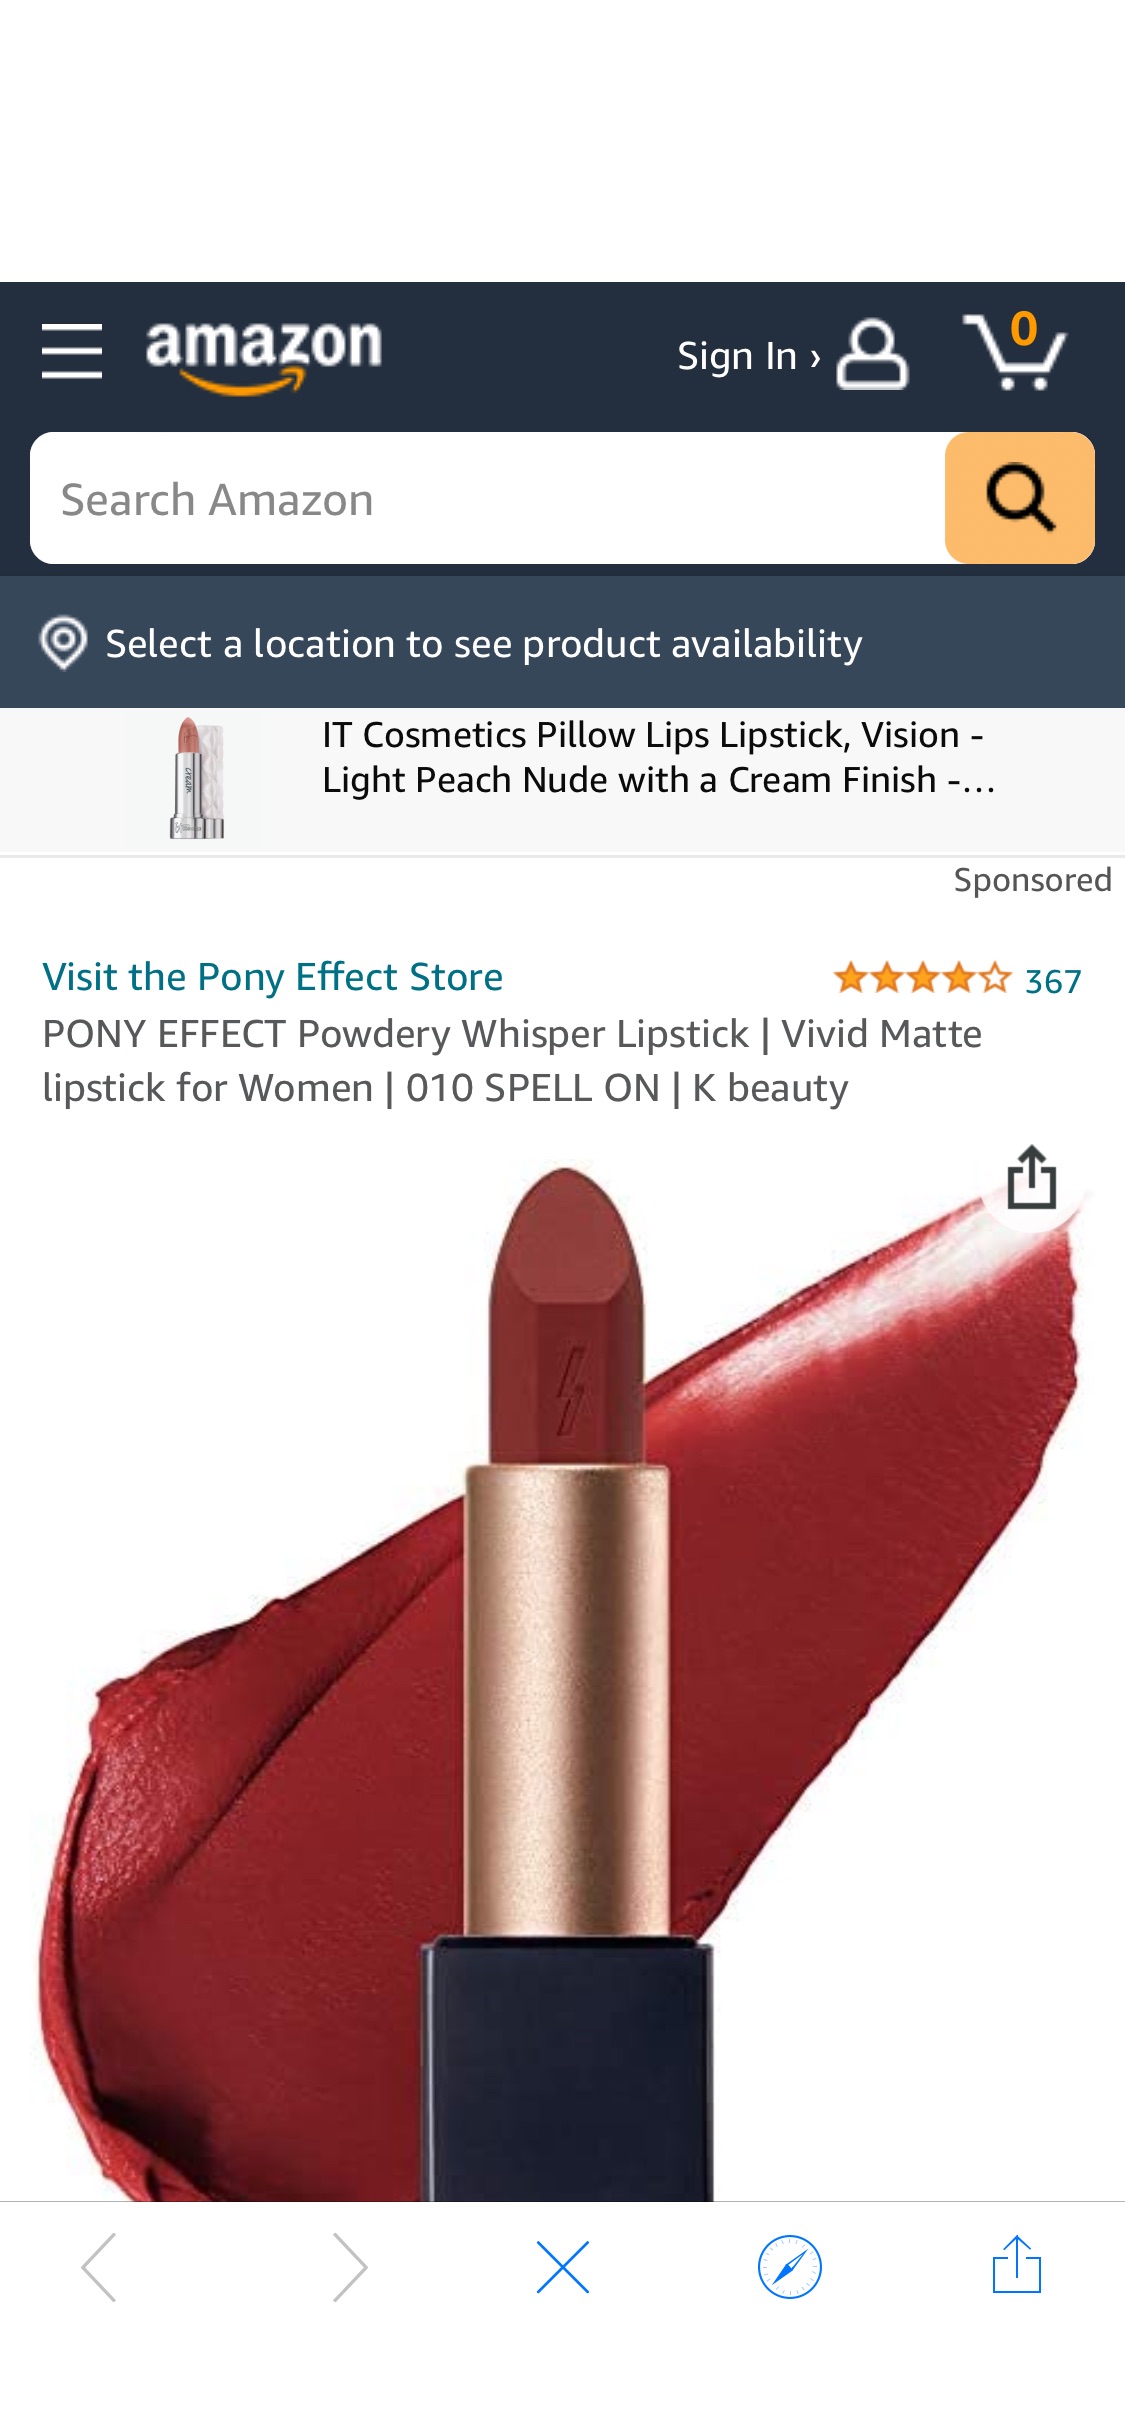 Amazon.com : PONY EFFECT Powdery Whisper Lipstick | Vivid Matte lipstick for Women | 010 SPELL ON